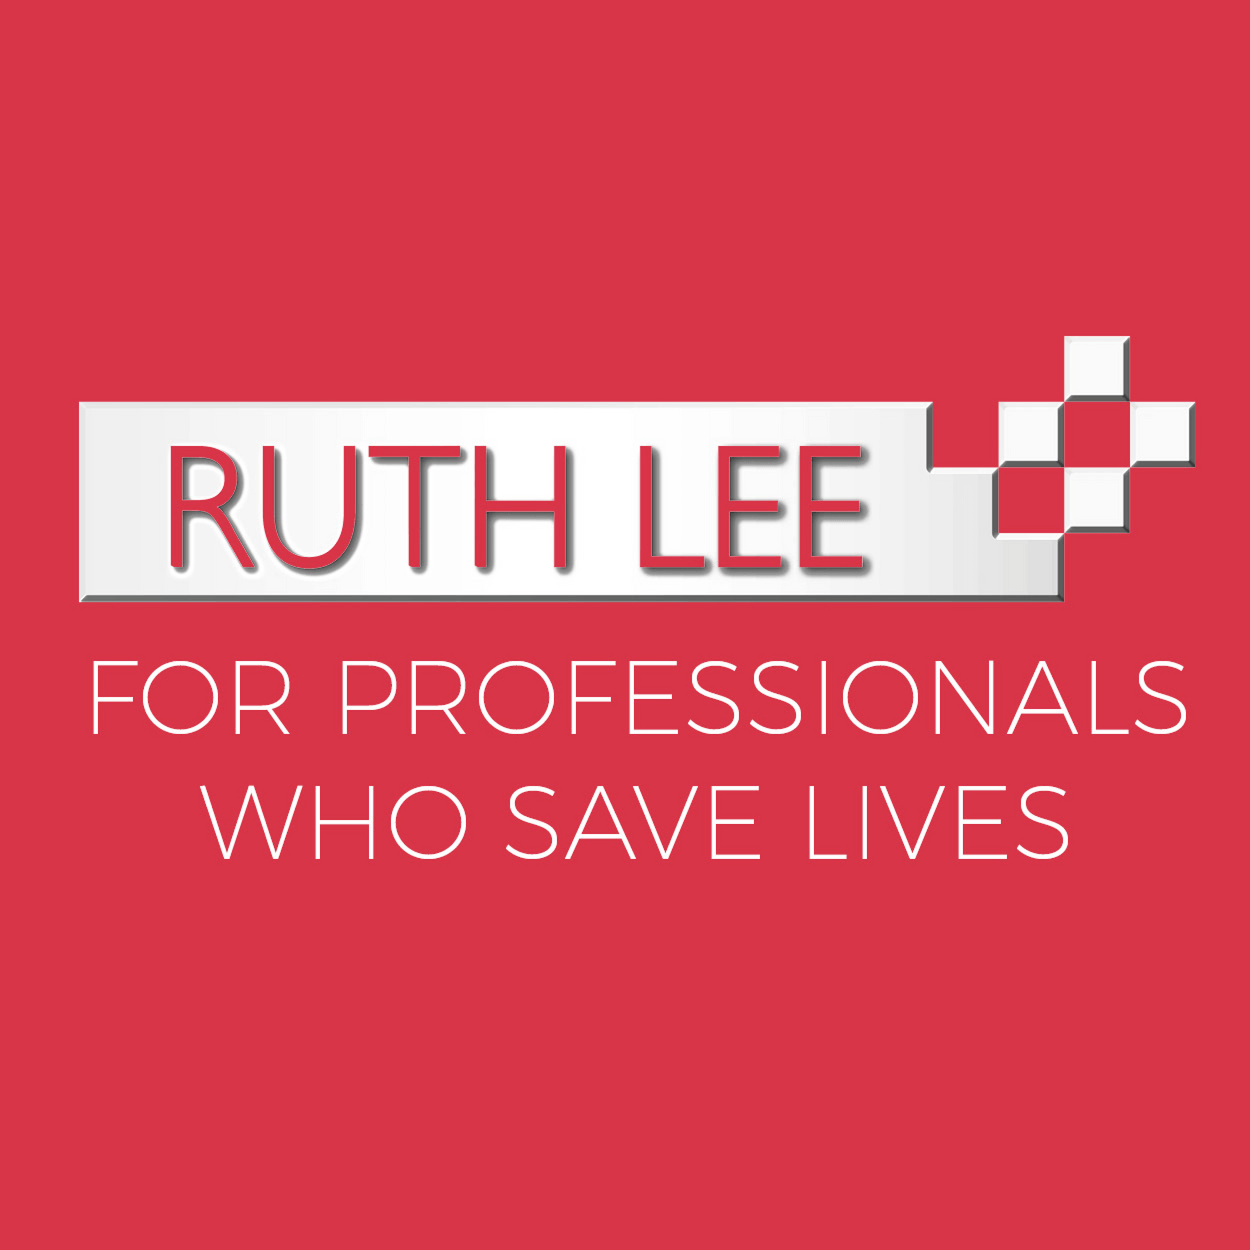 Ruth Lee Ltd